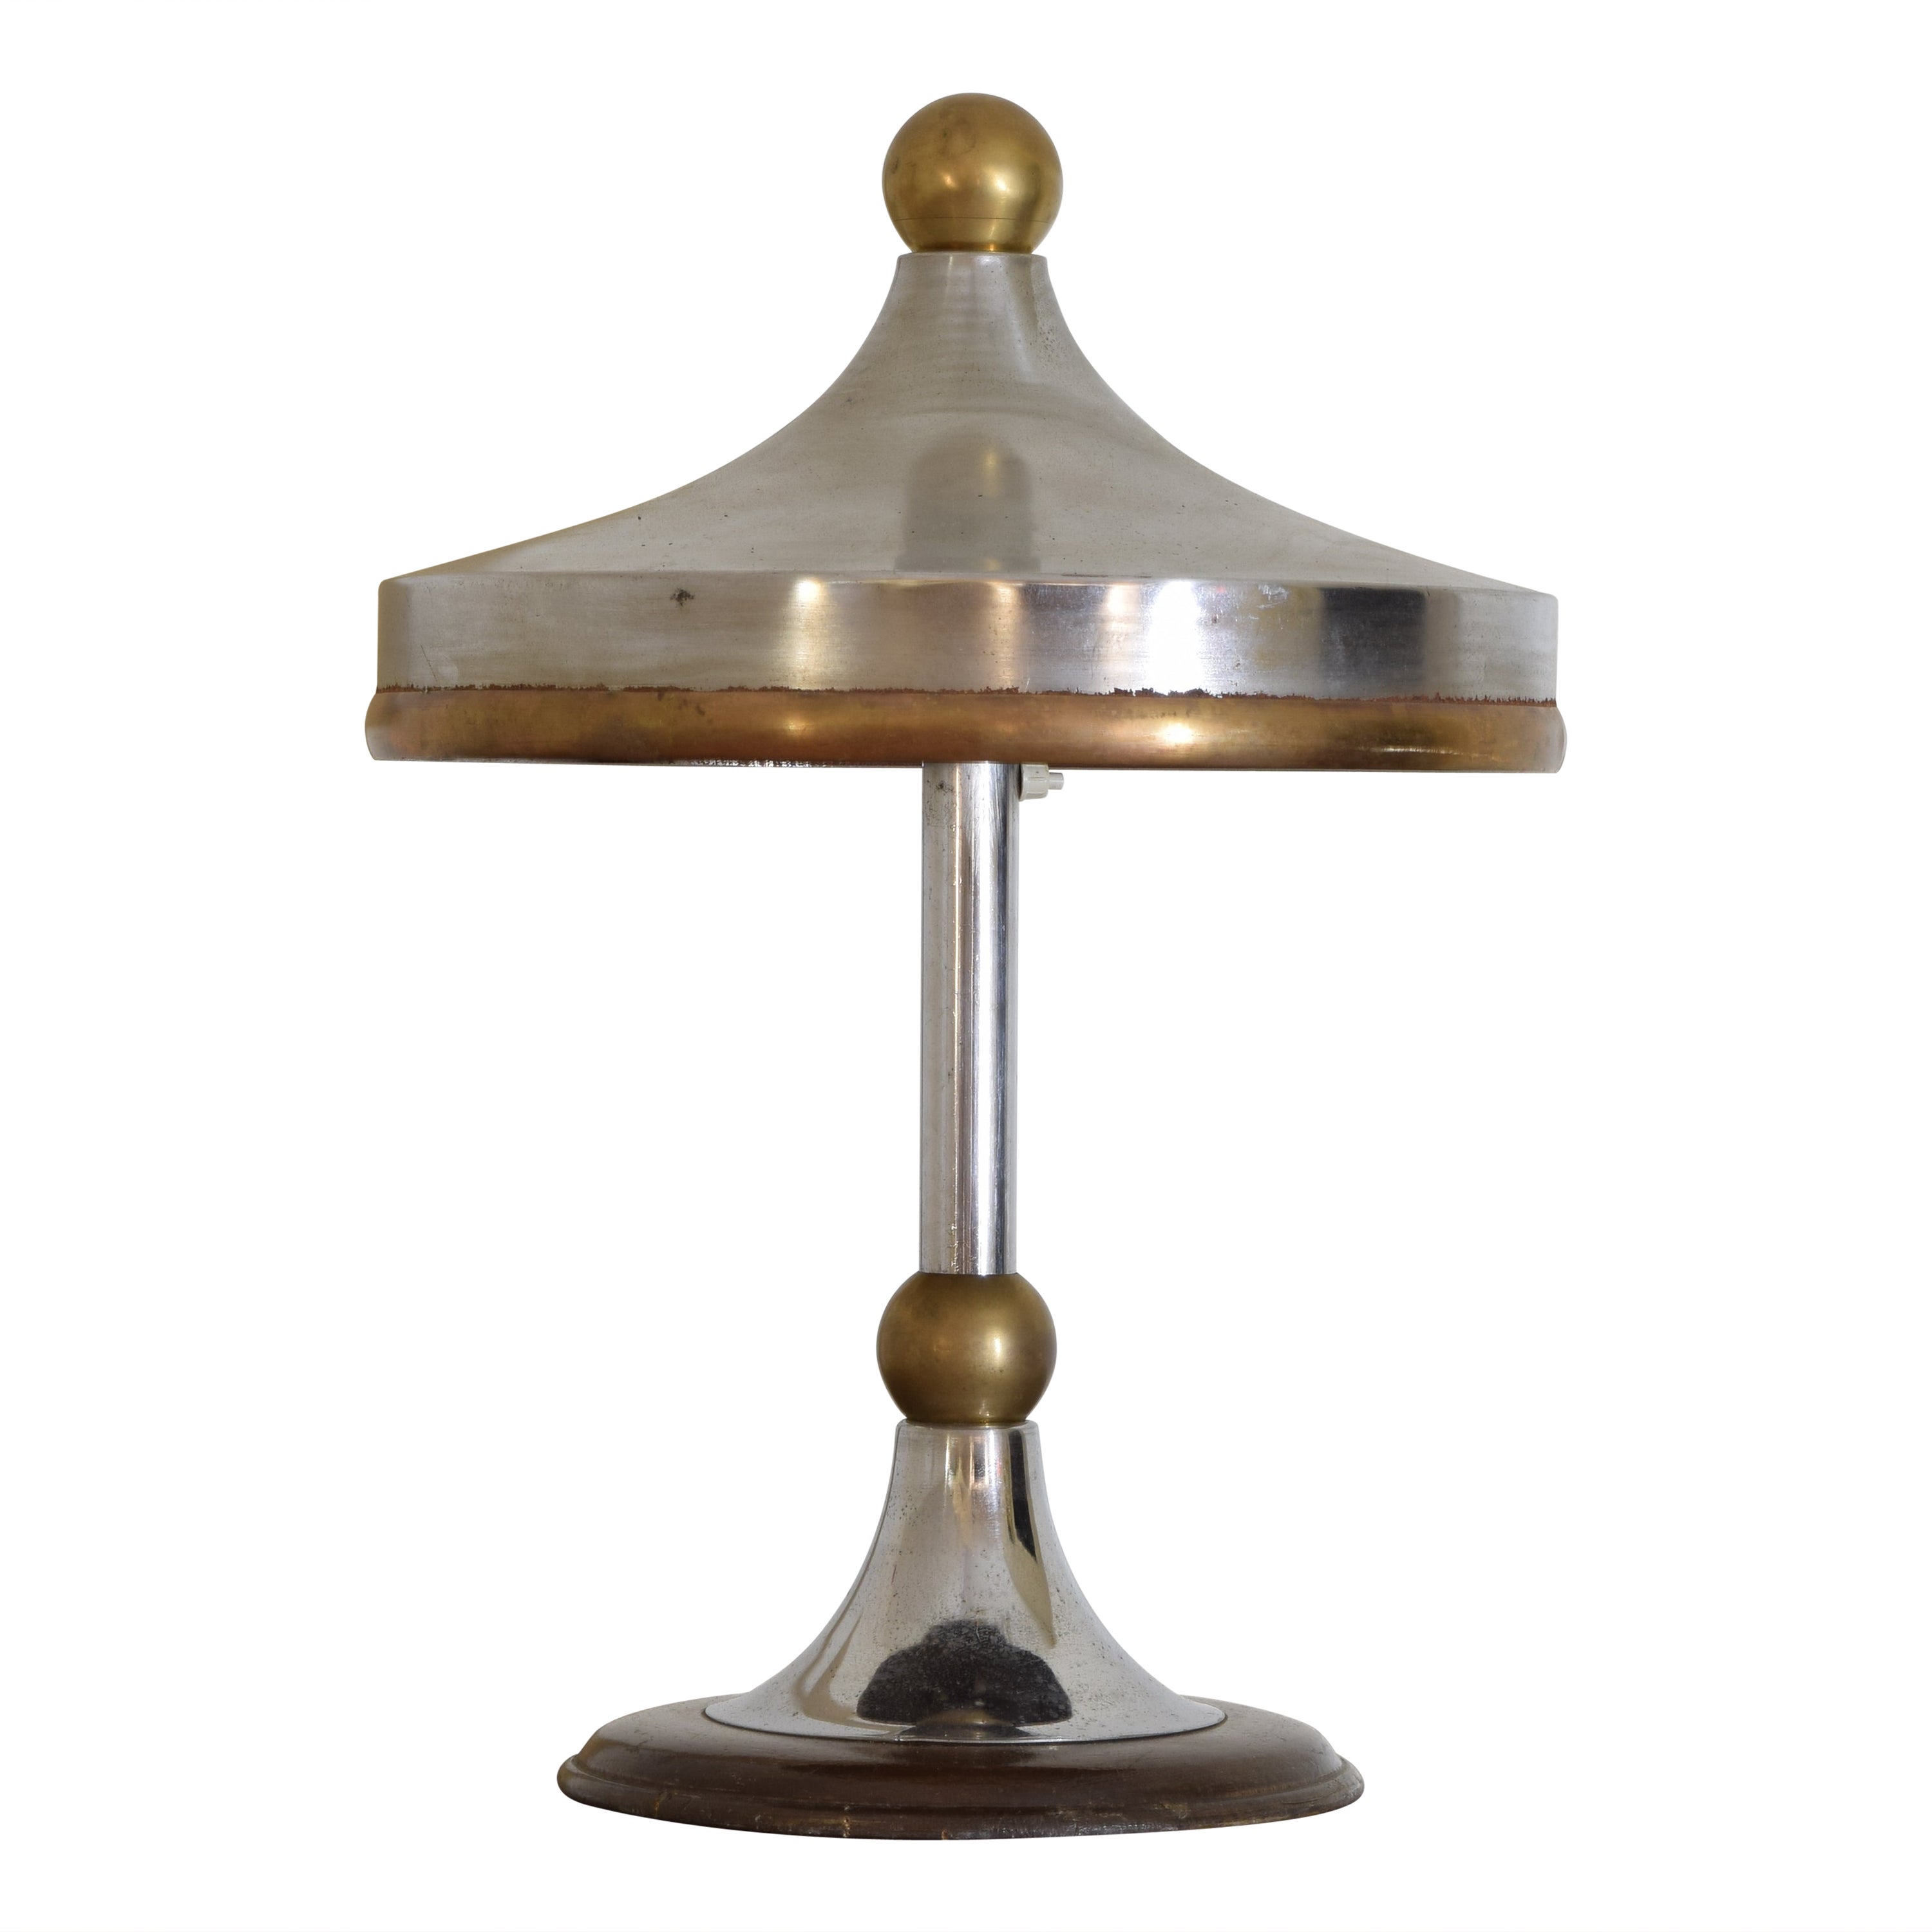 Italian Mid Century Modern Chrome and Brass Table Lamp, early 2nd half 20th cen.